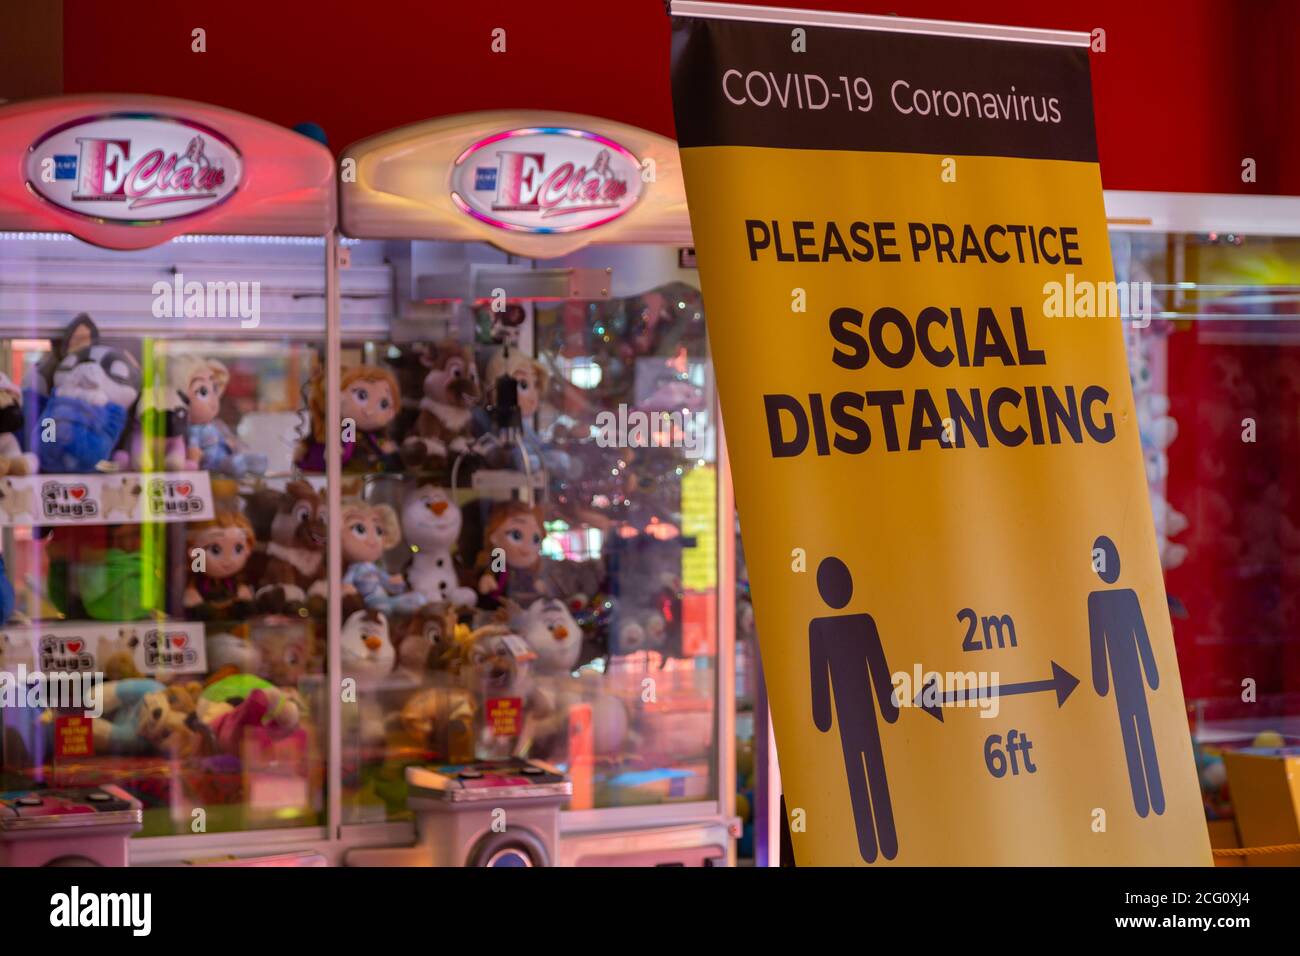 A social distancing sign inside an amusement arcade during the coronavirus Pandemic Stock Photo